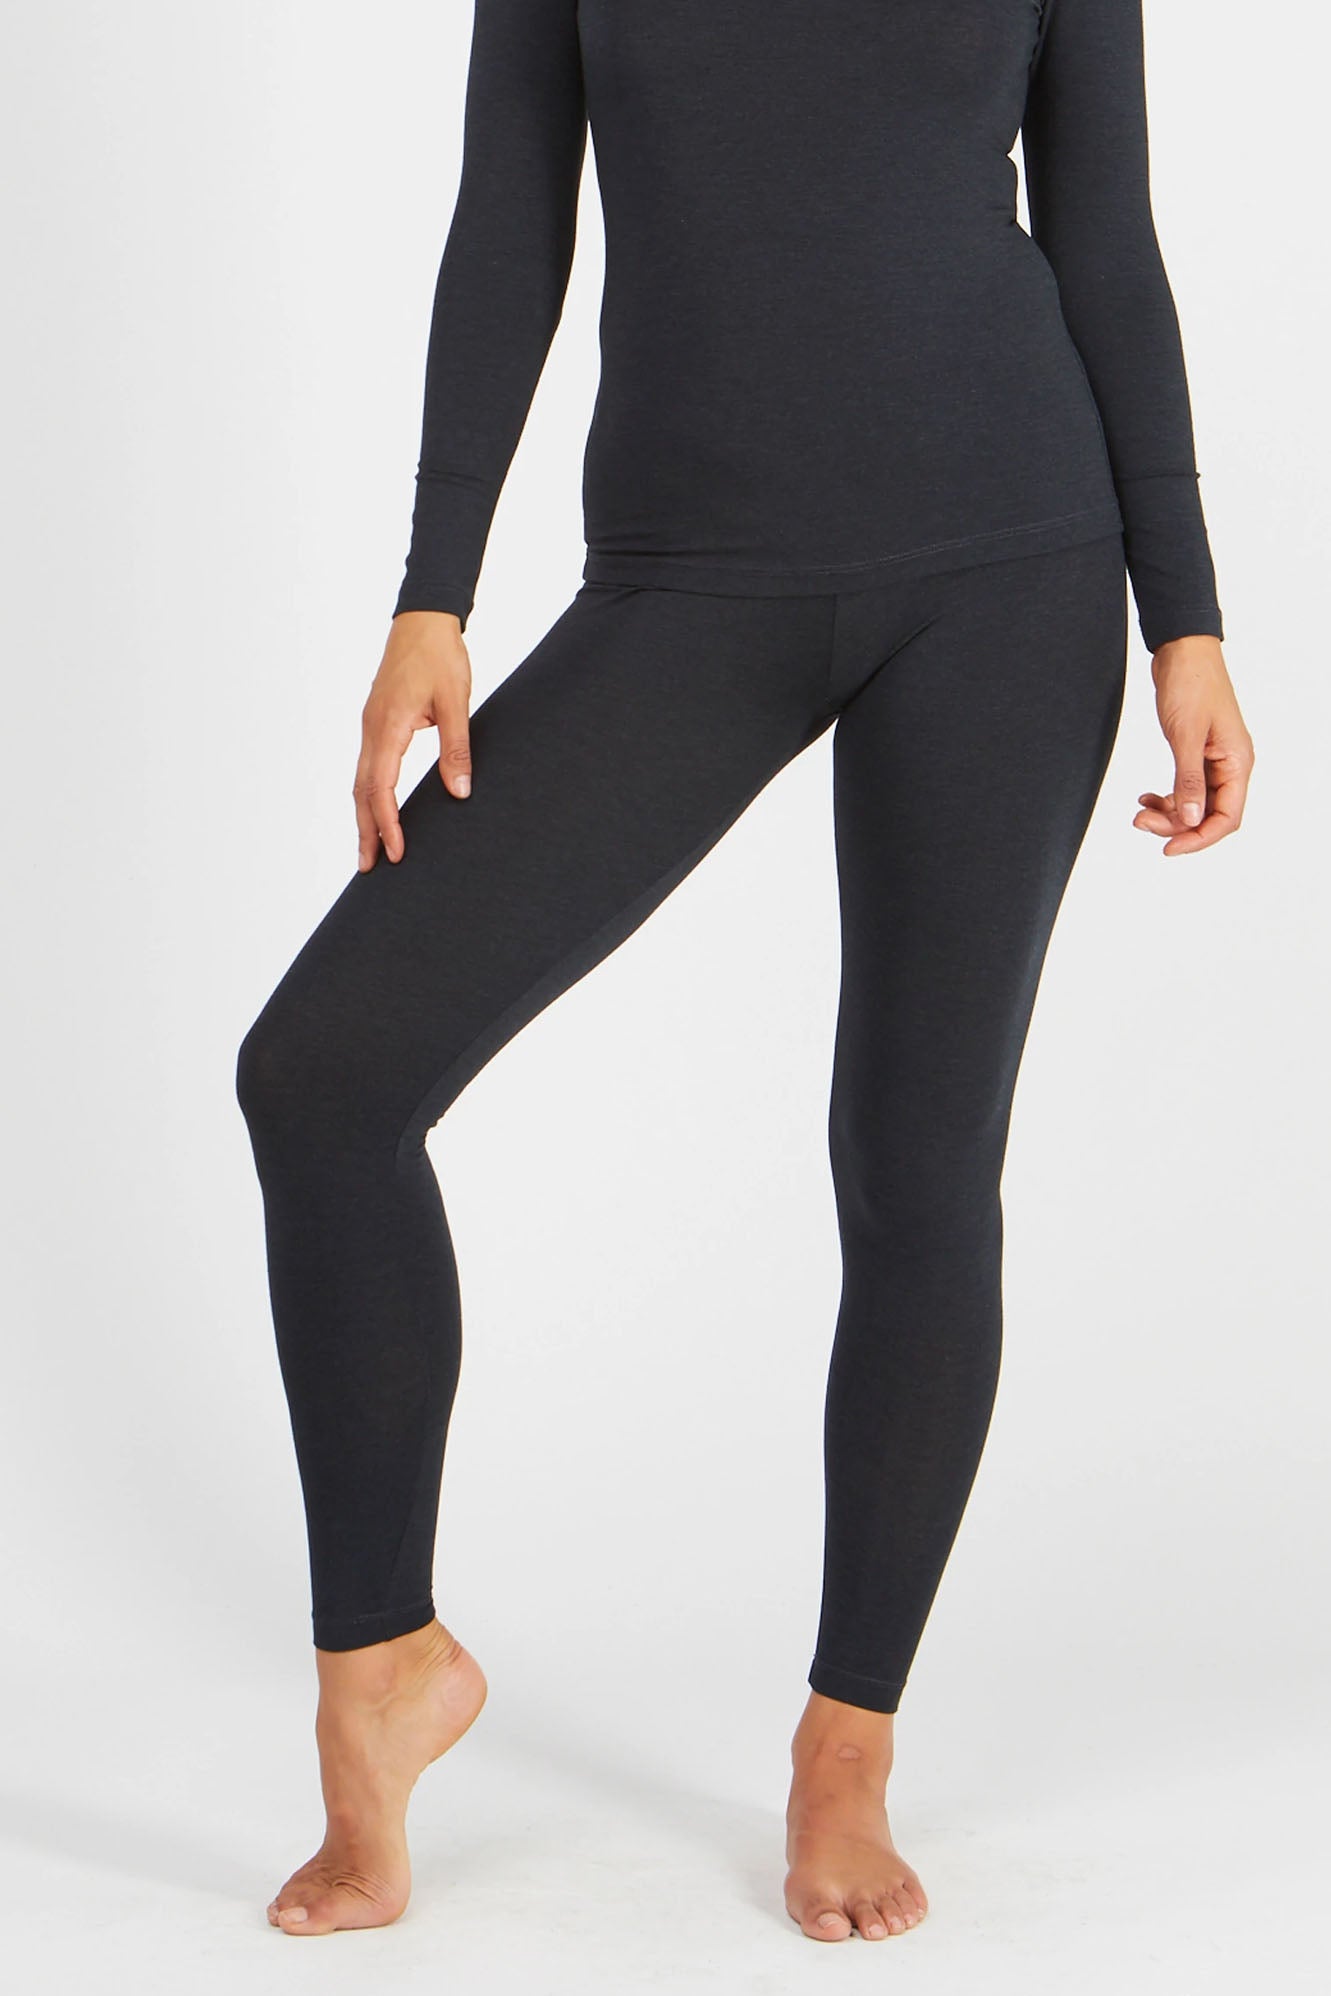 Woman wearing Tani 89118 leggings in graphite